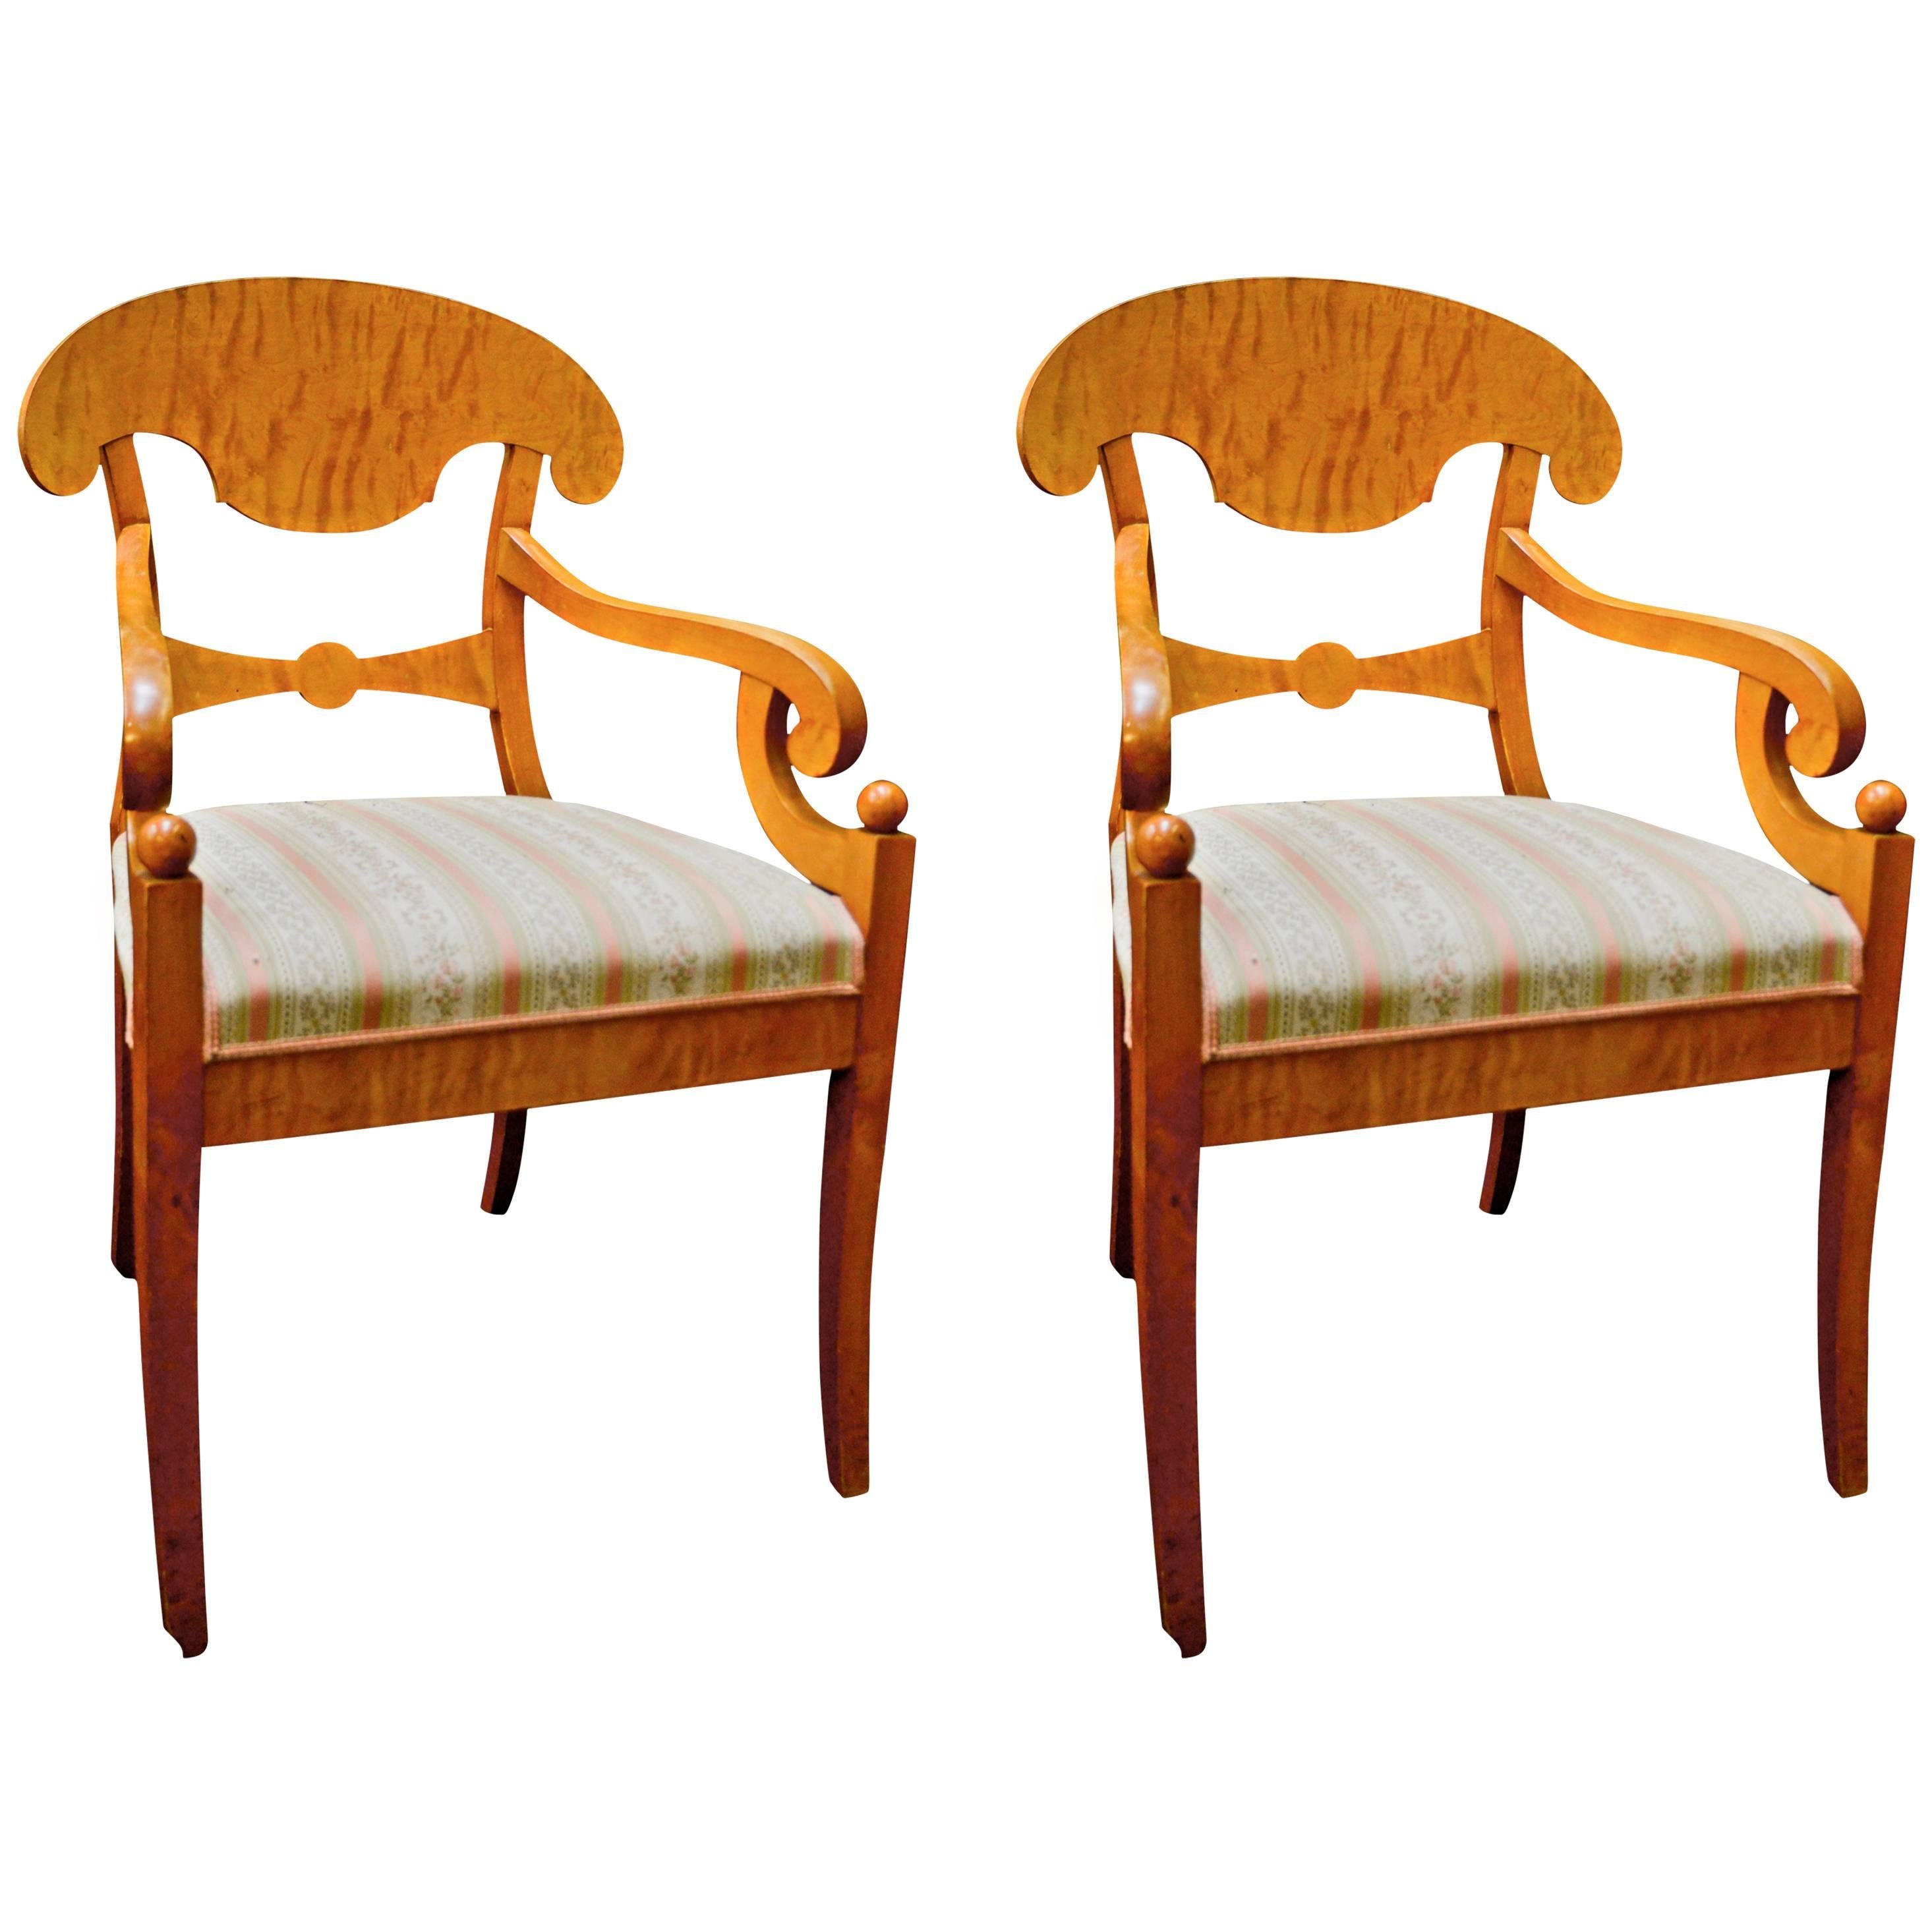 Antique Biedermeier Empire Swedish Carver Chairs in Quilted Golden Birch